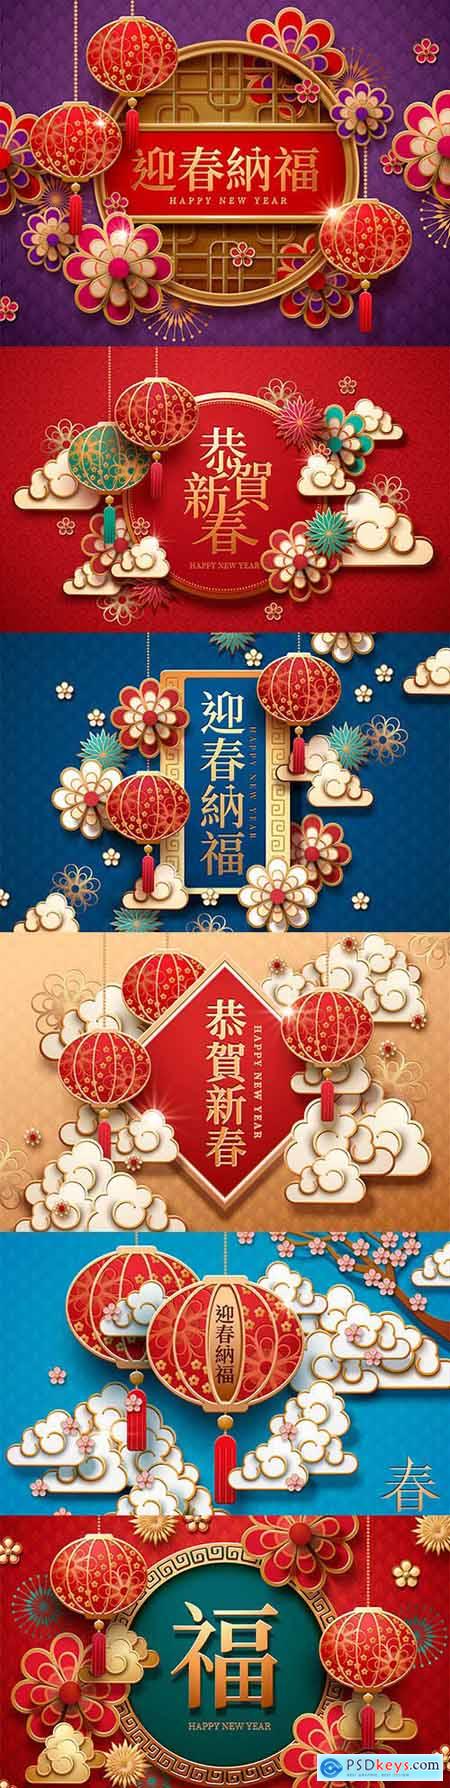 Happy New Year words written in hanzi on spring verse